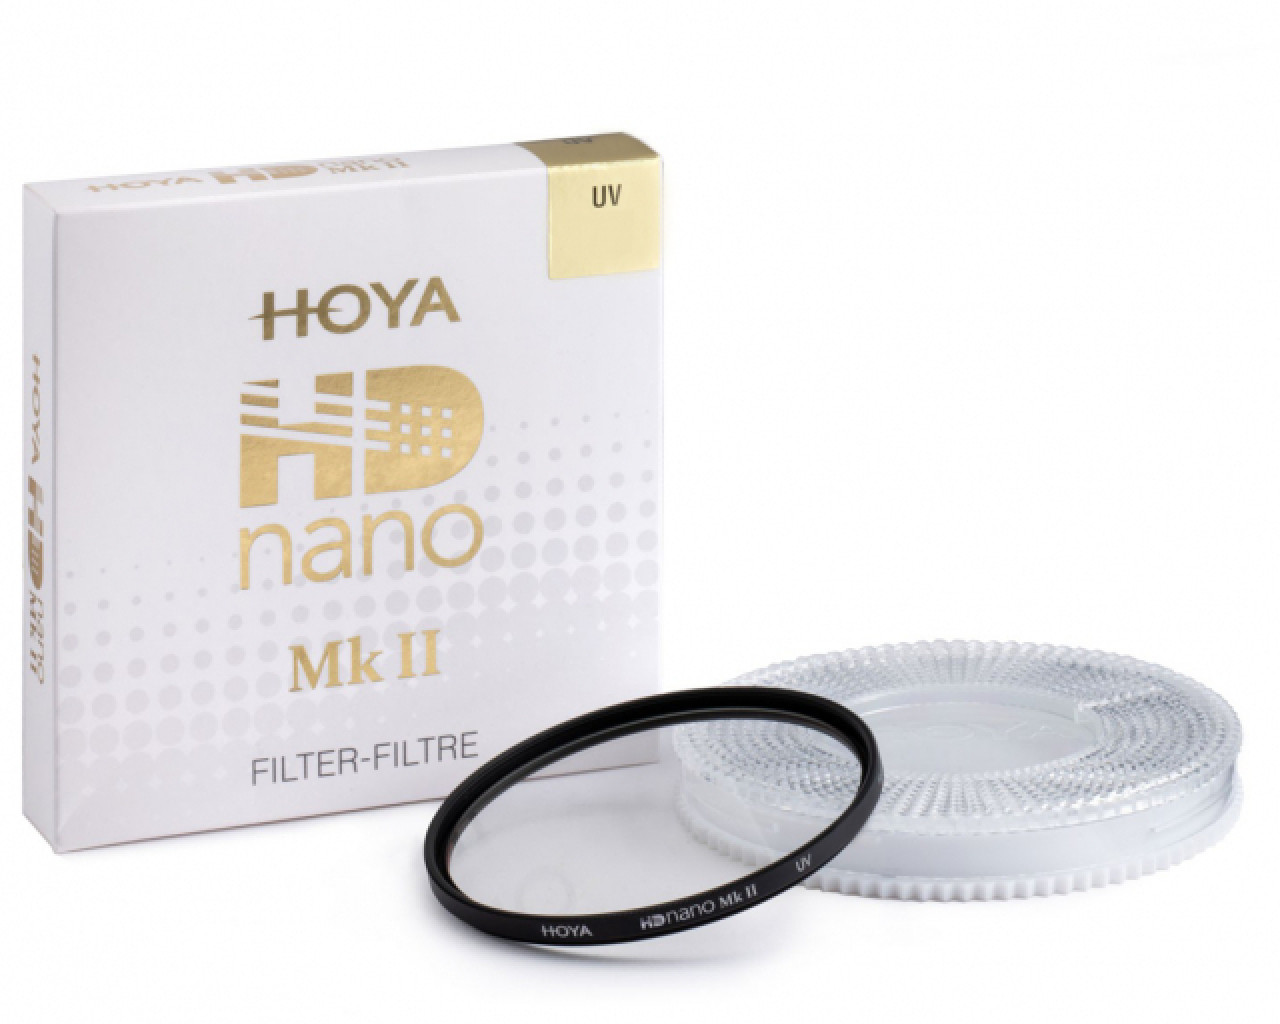 Hoya Filtro HD nano MkII UV 55mm